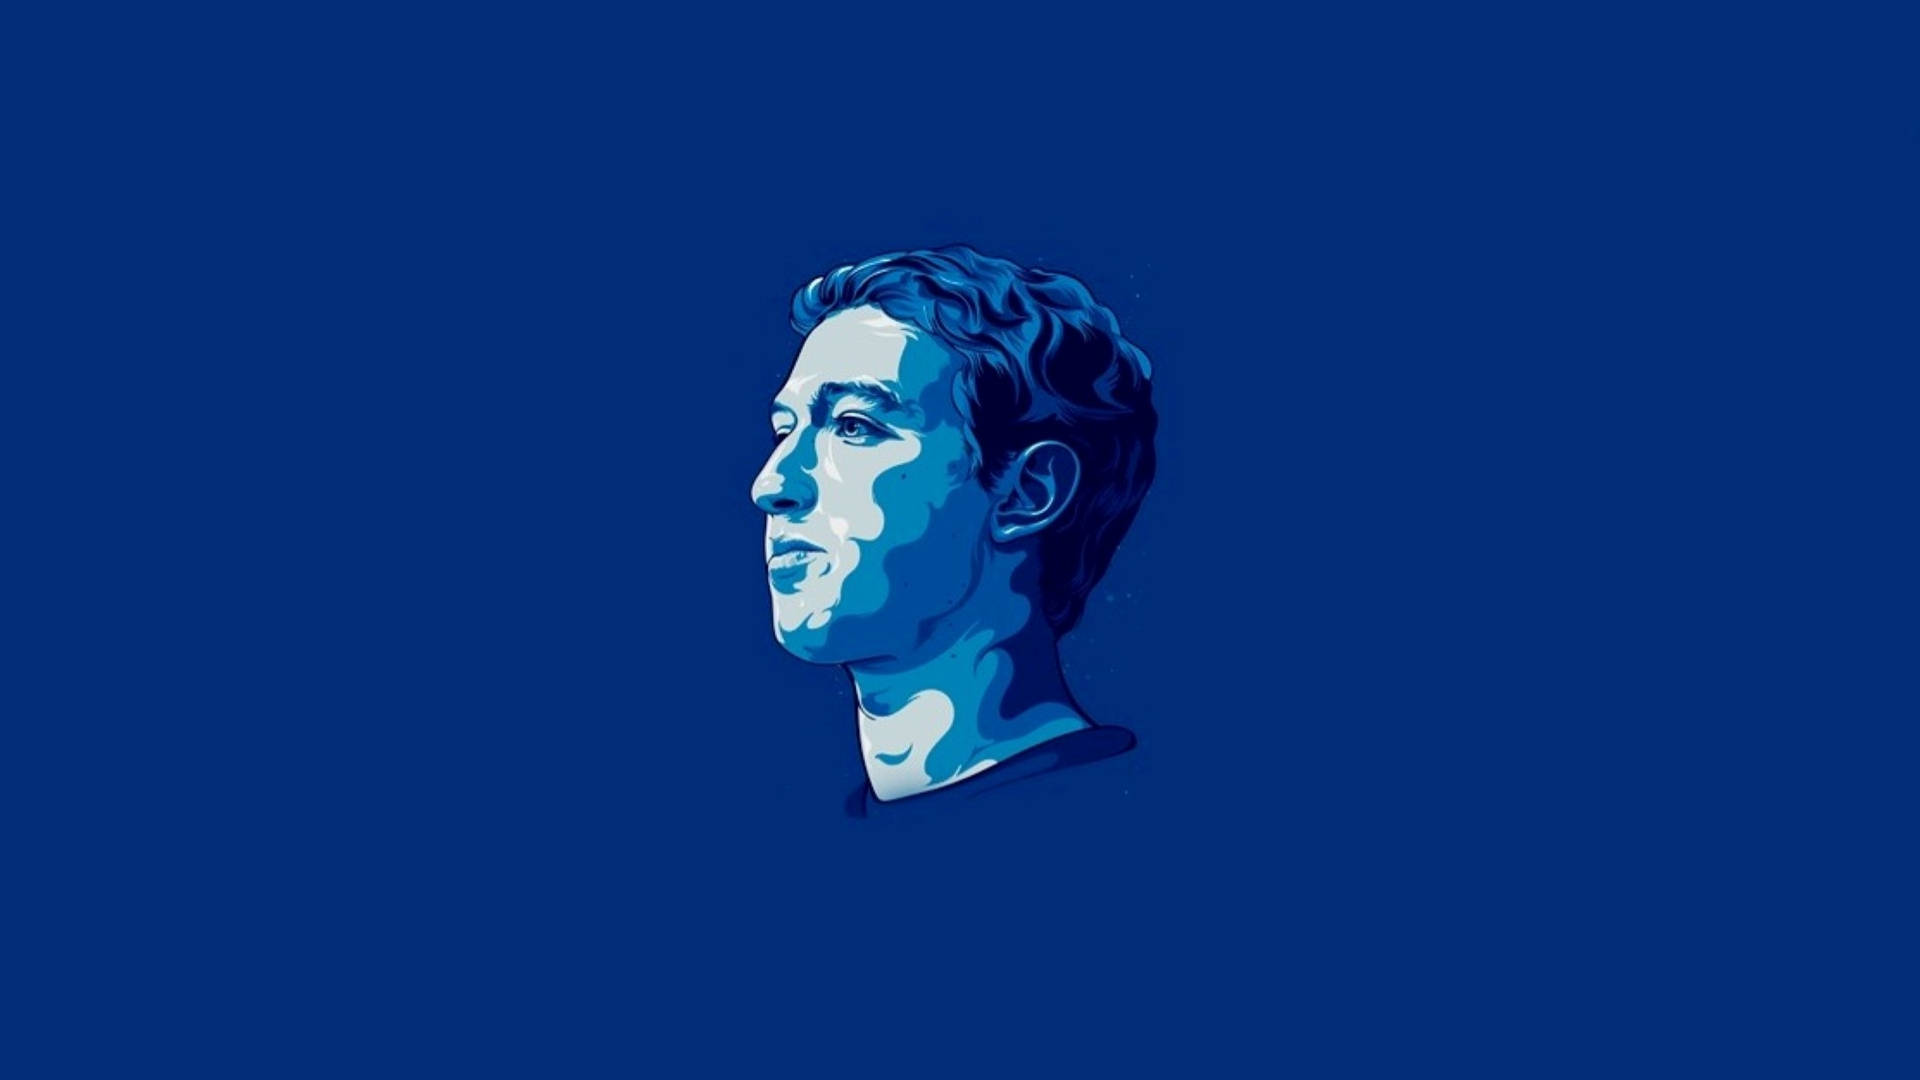 Mark Zuckerberg Blue Vector Art Background